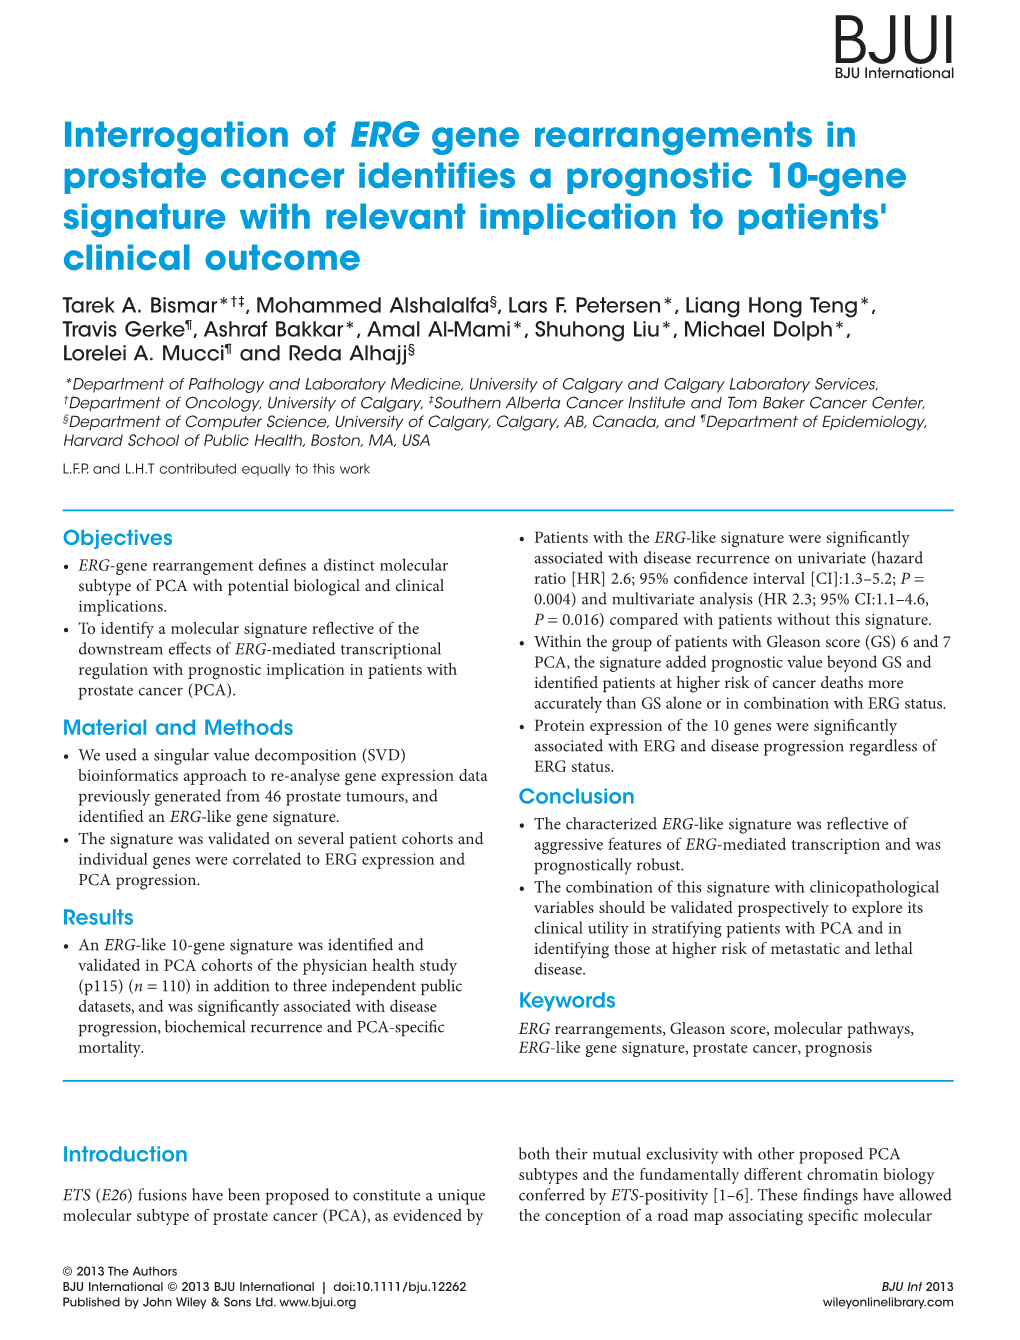 Interrogation of ERG Gene Rearrangements in Prostate Cancer Identifies a Prognostic 10Gene Signature with Relevant Implication T